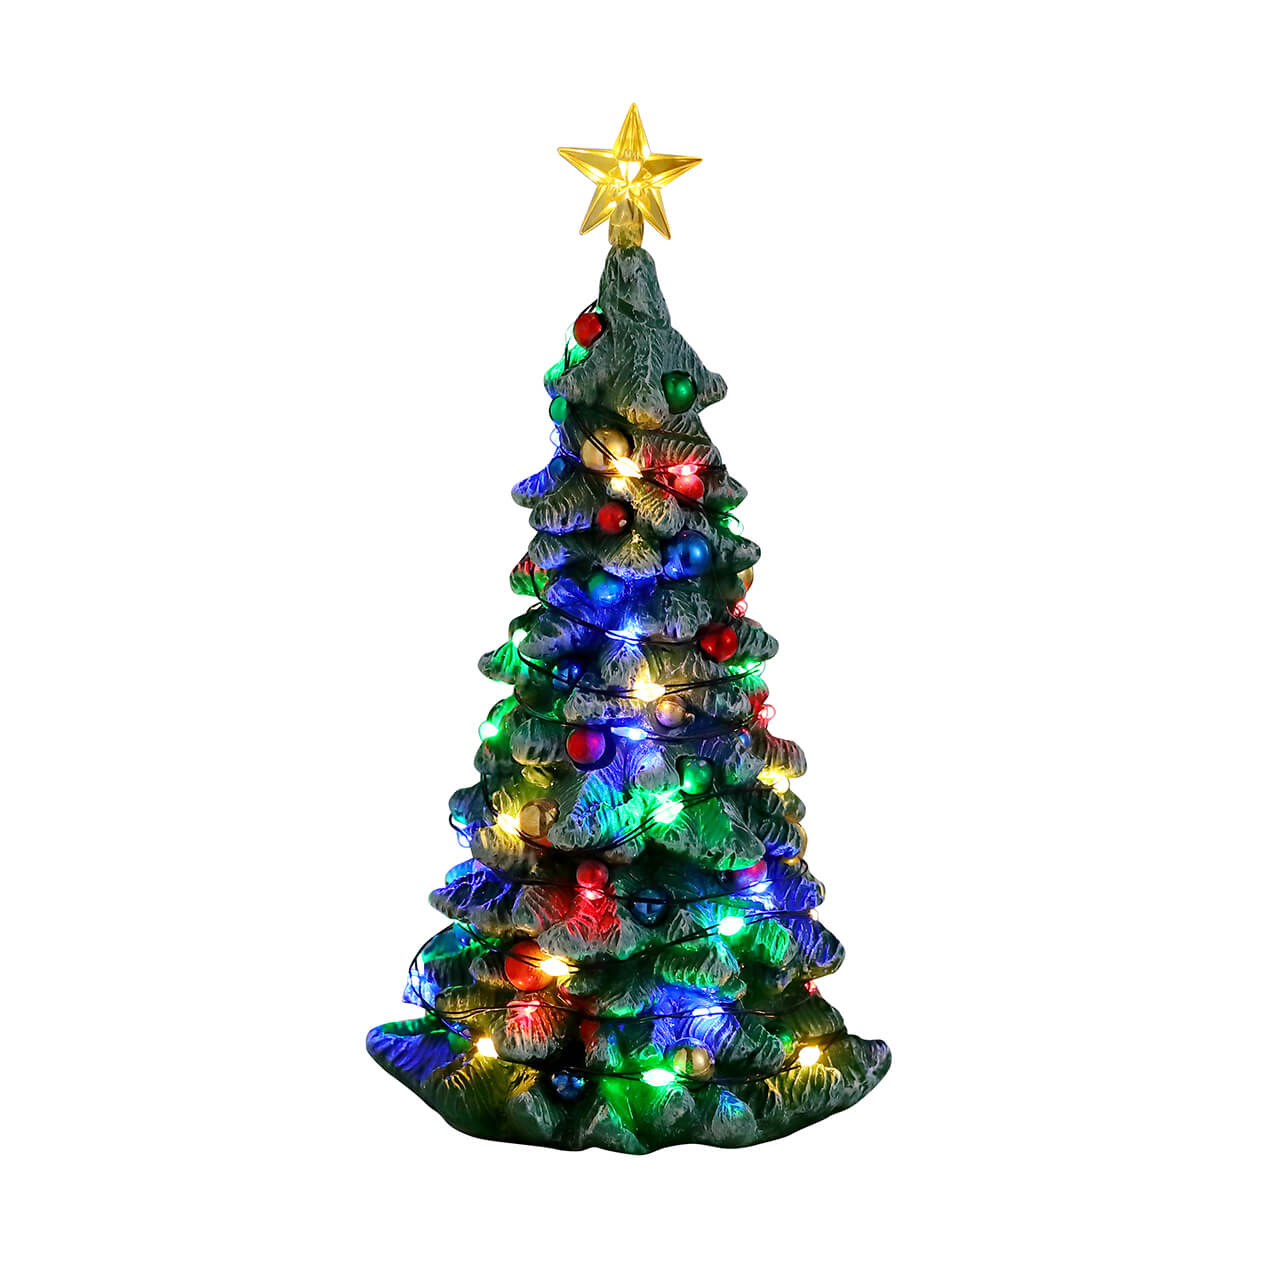 Lemax 34102 Snowy Christmas Tree